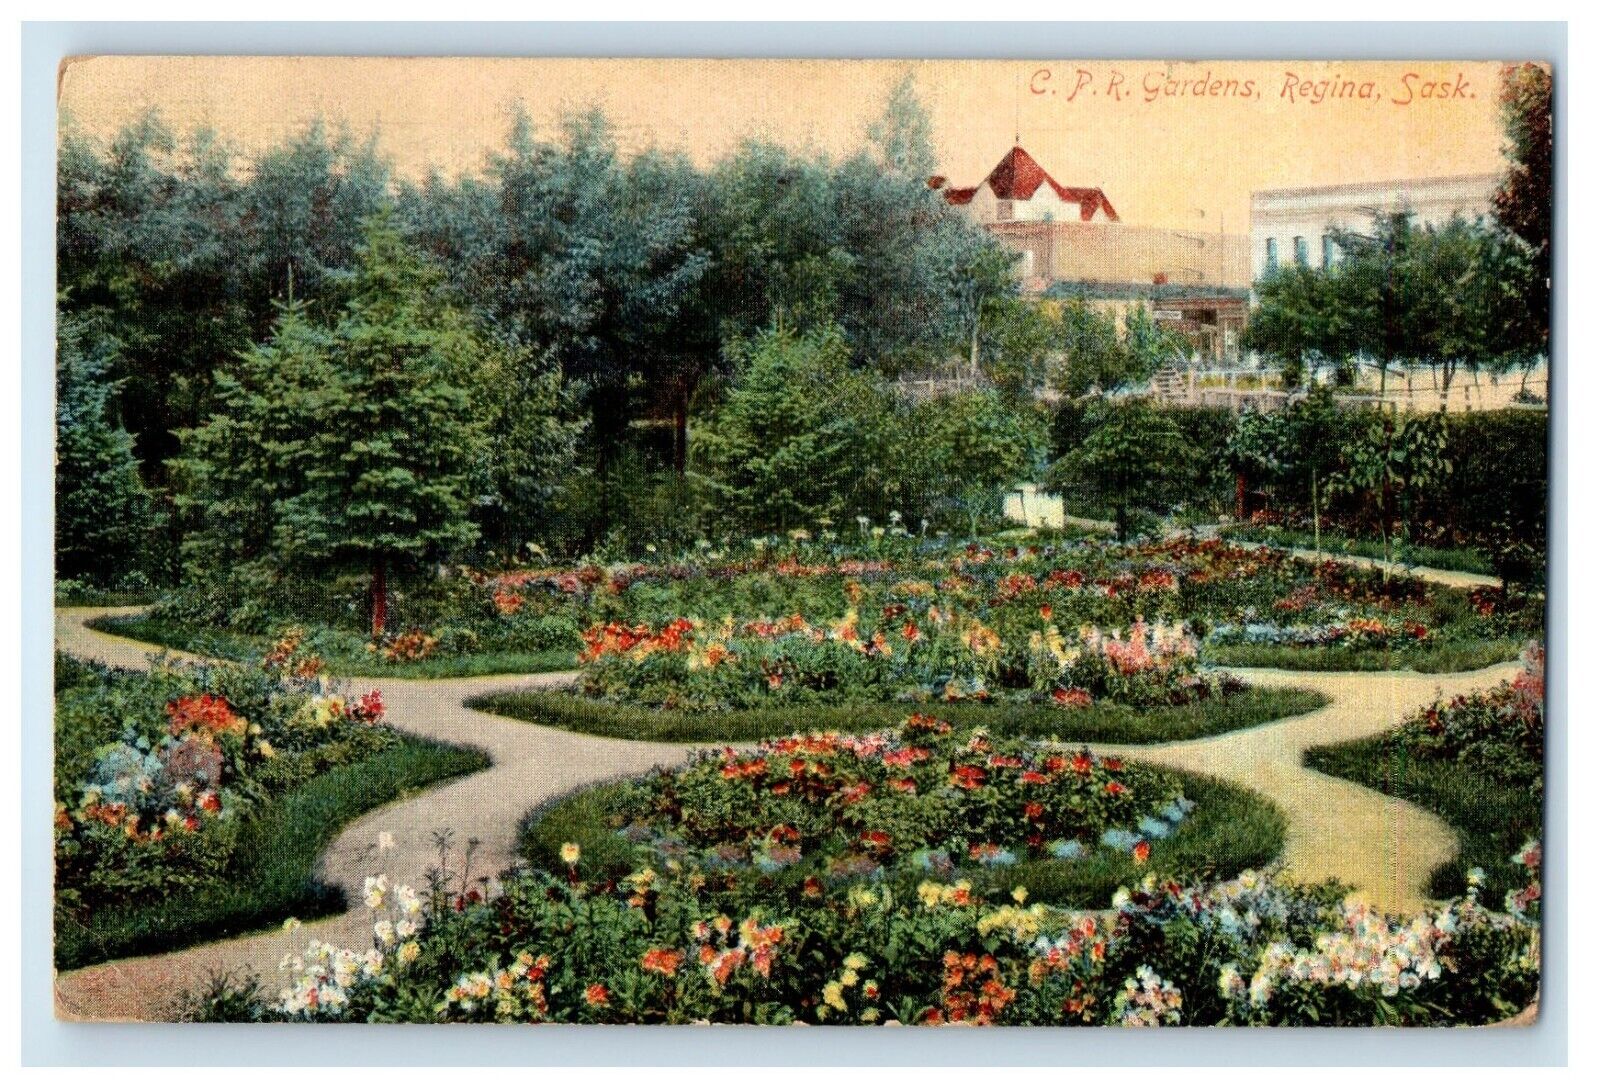 1908 C. P. R. Gardens Flowers Regina Saskatchewan Canada Antique Postcard